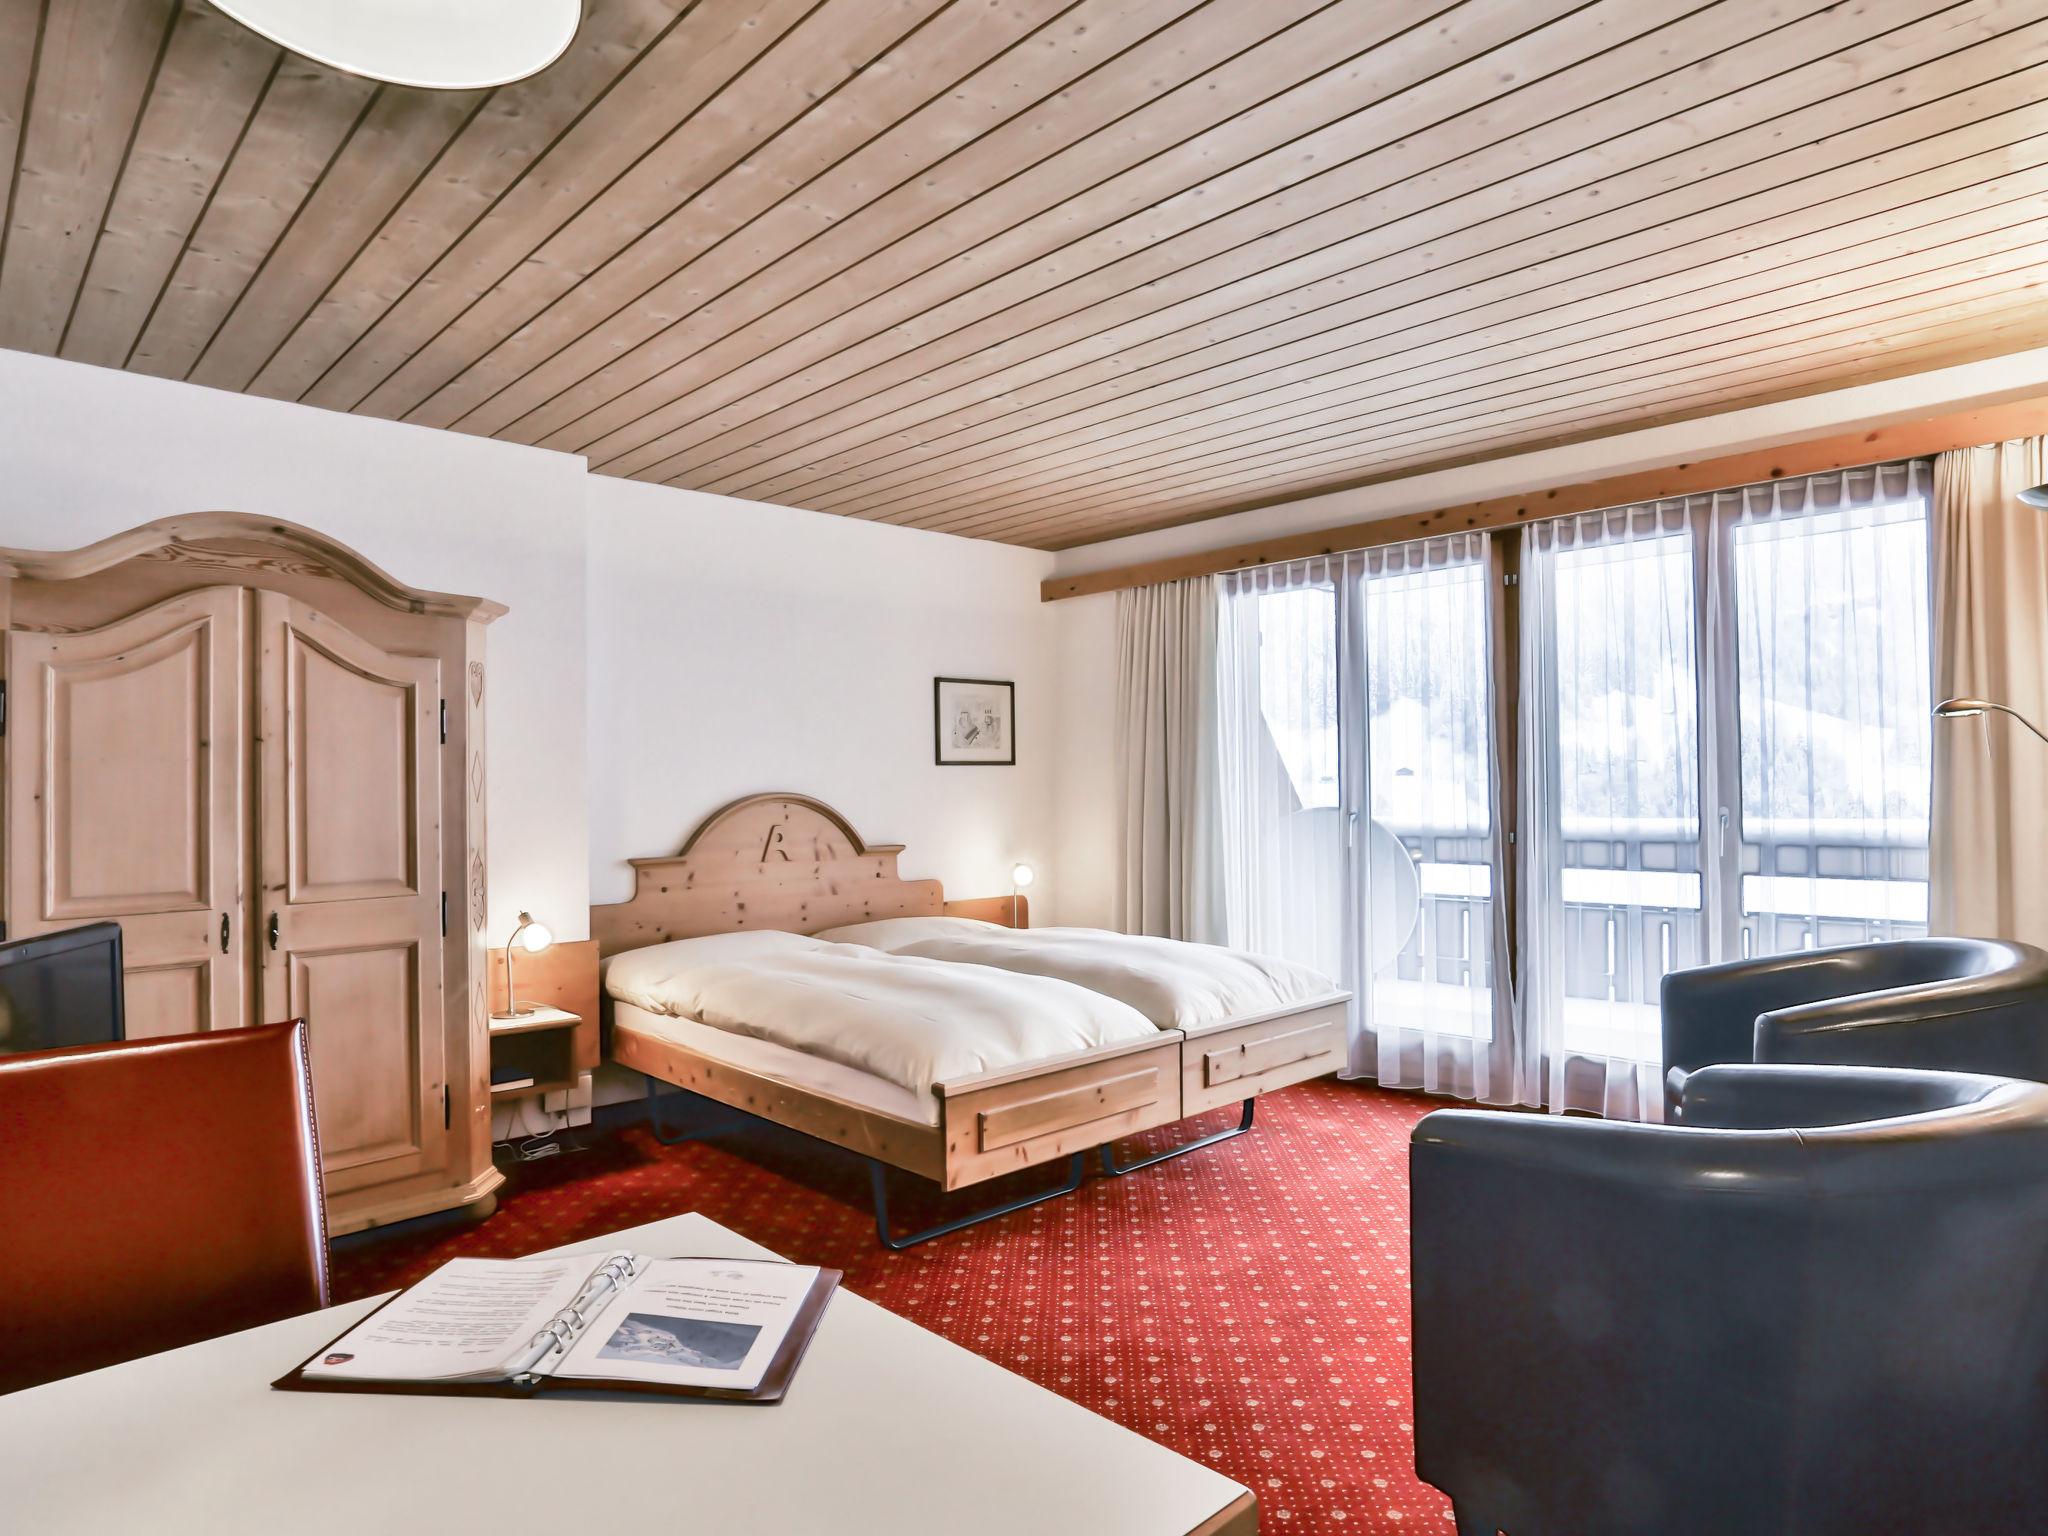 Foto 3 - Apartment in Grindelwald mit blick auf die berge